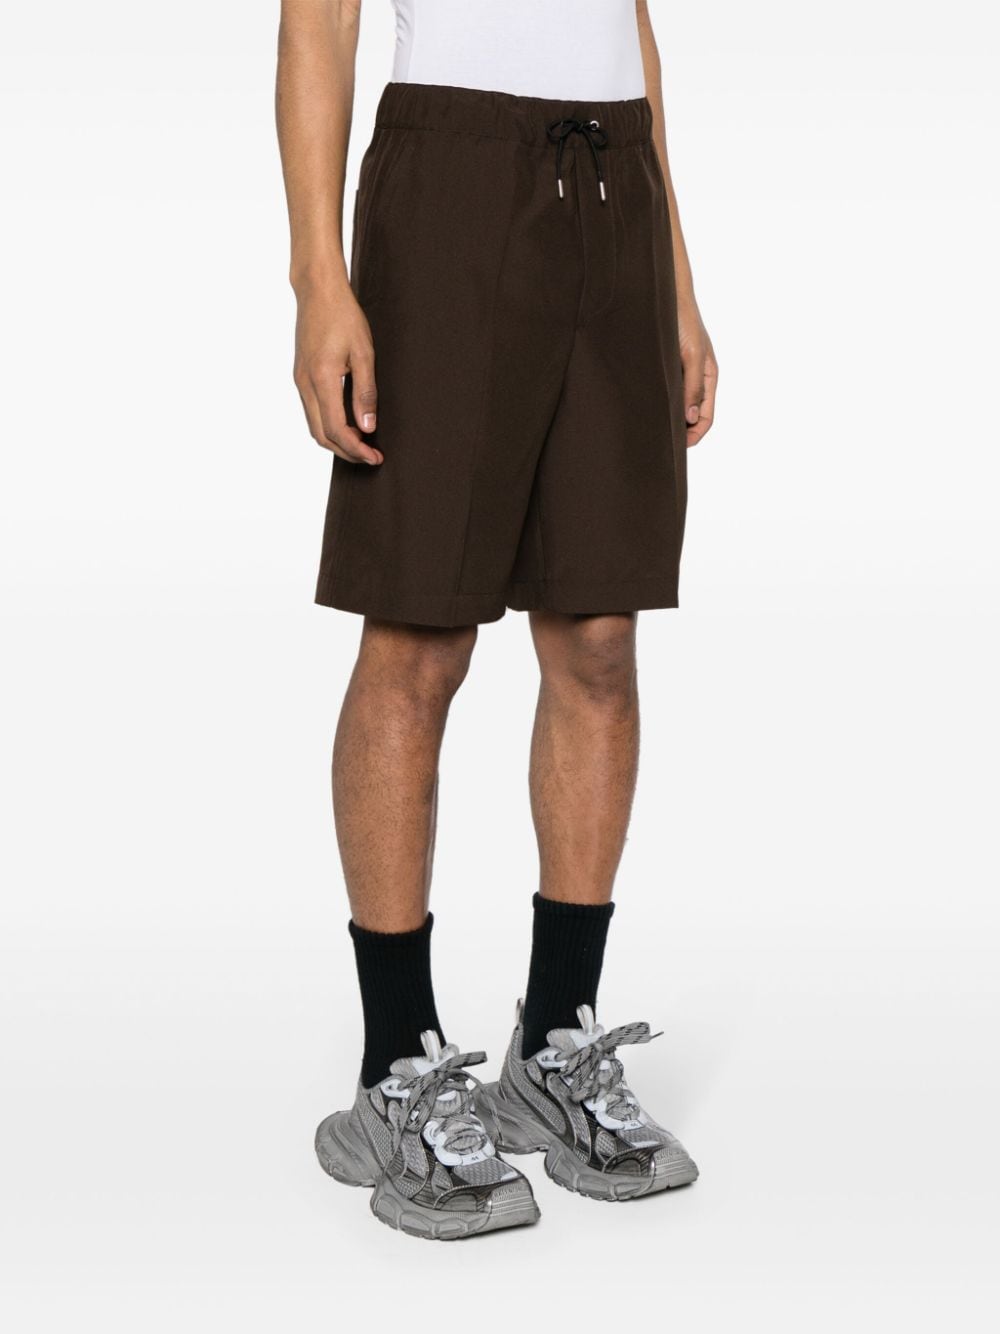 Brown Bermuda shorts